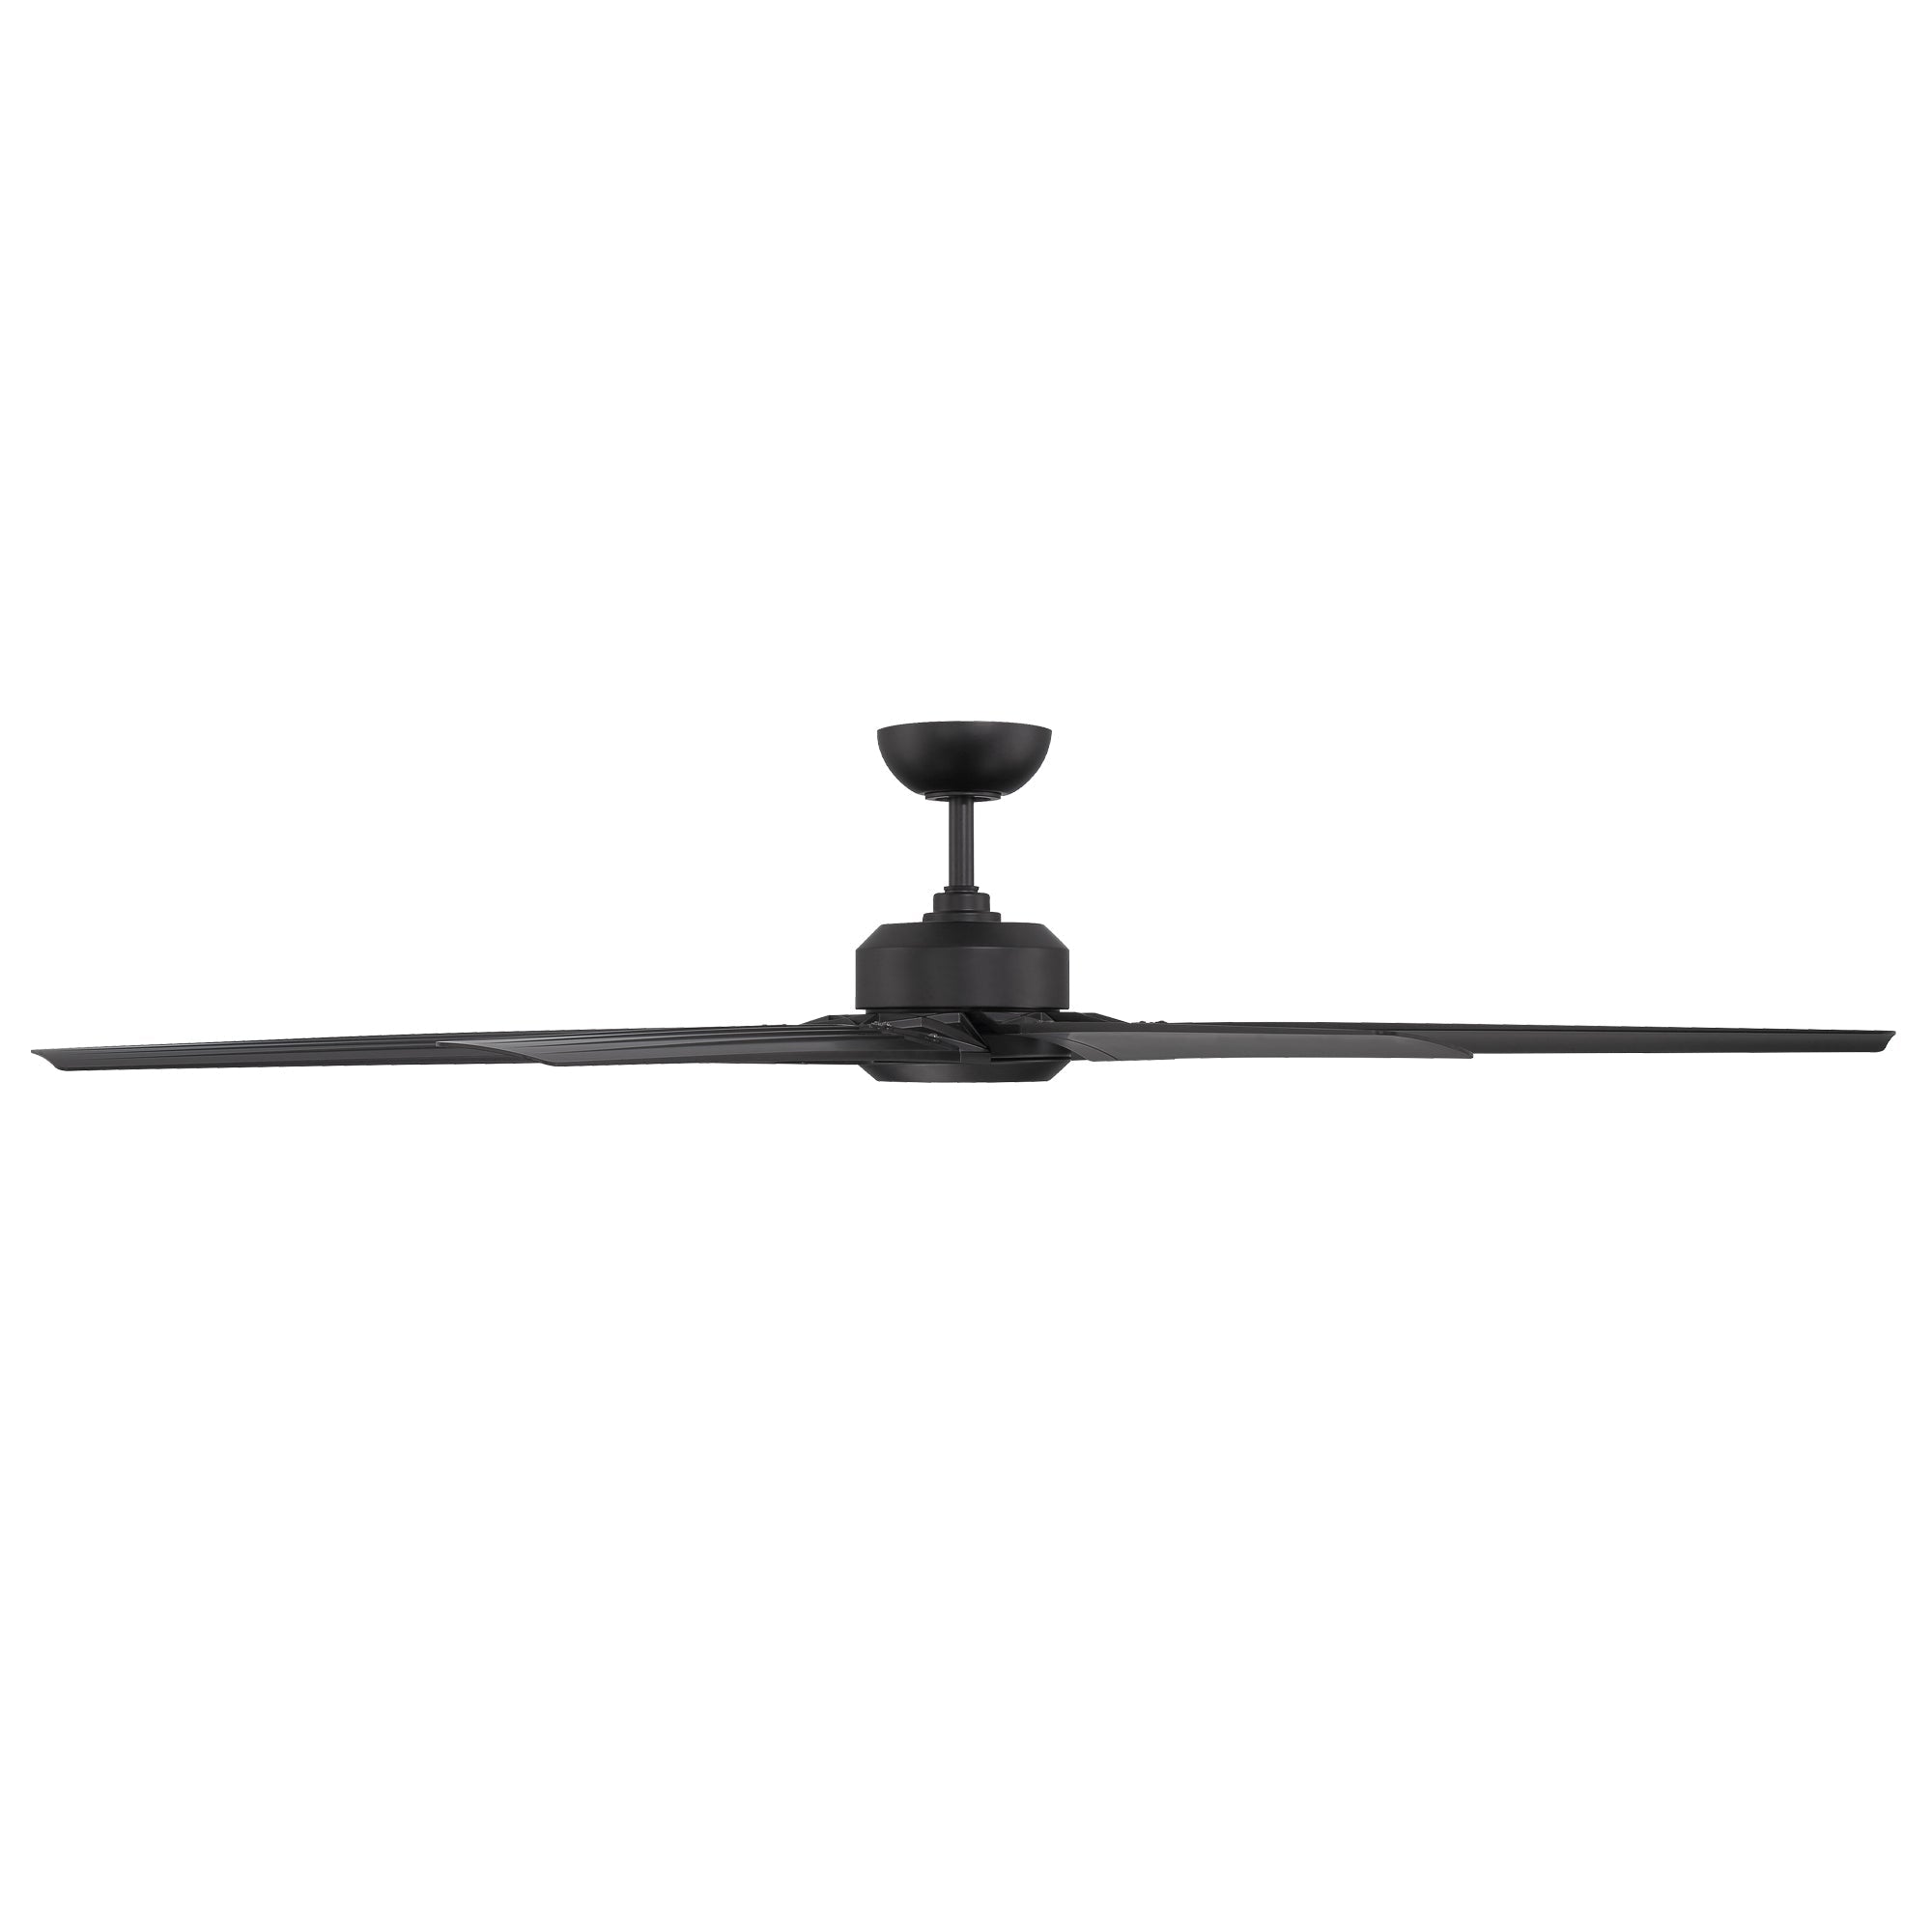 Roboto XL Indoor/Outdoor 8-Blade 70" Smart Ceiling Fan with Remote Control